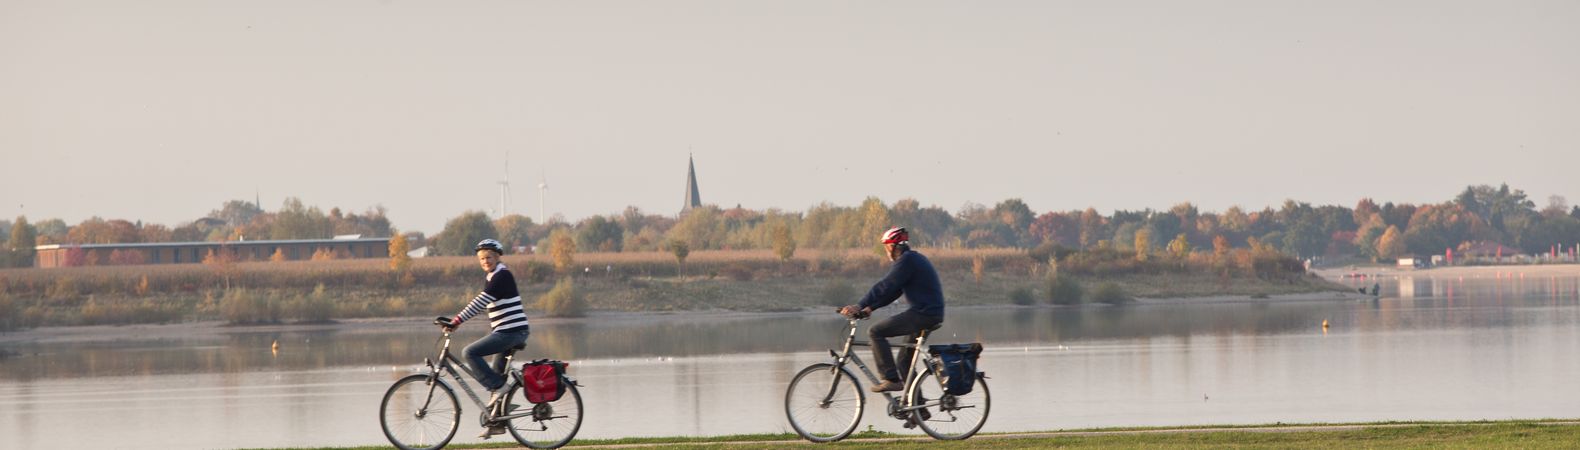 Zwei Fahrradfahrer fahren entlang des Rheinufers in Wesel